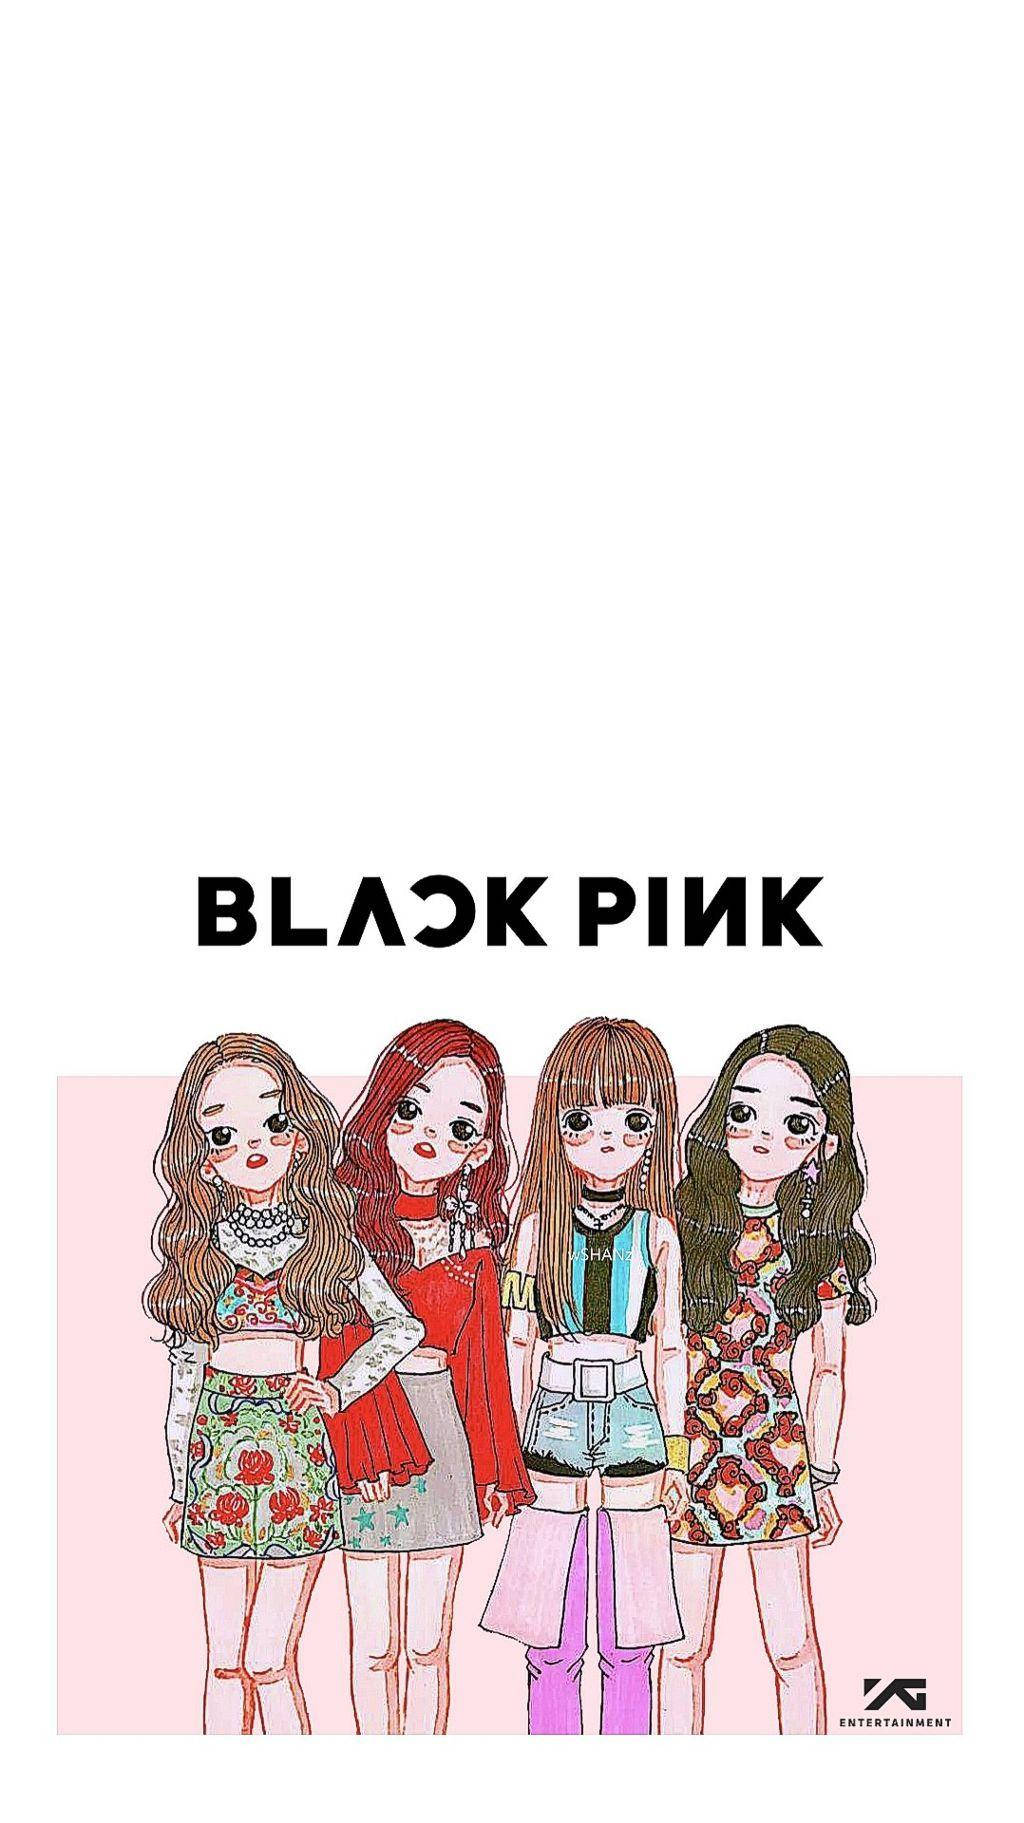 Blackpink Anime Version Of The Girls Wallpaper